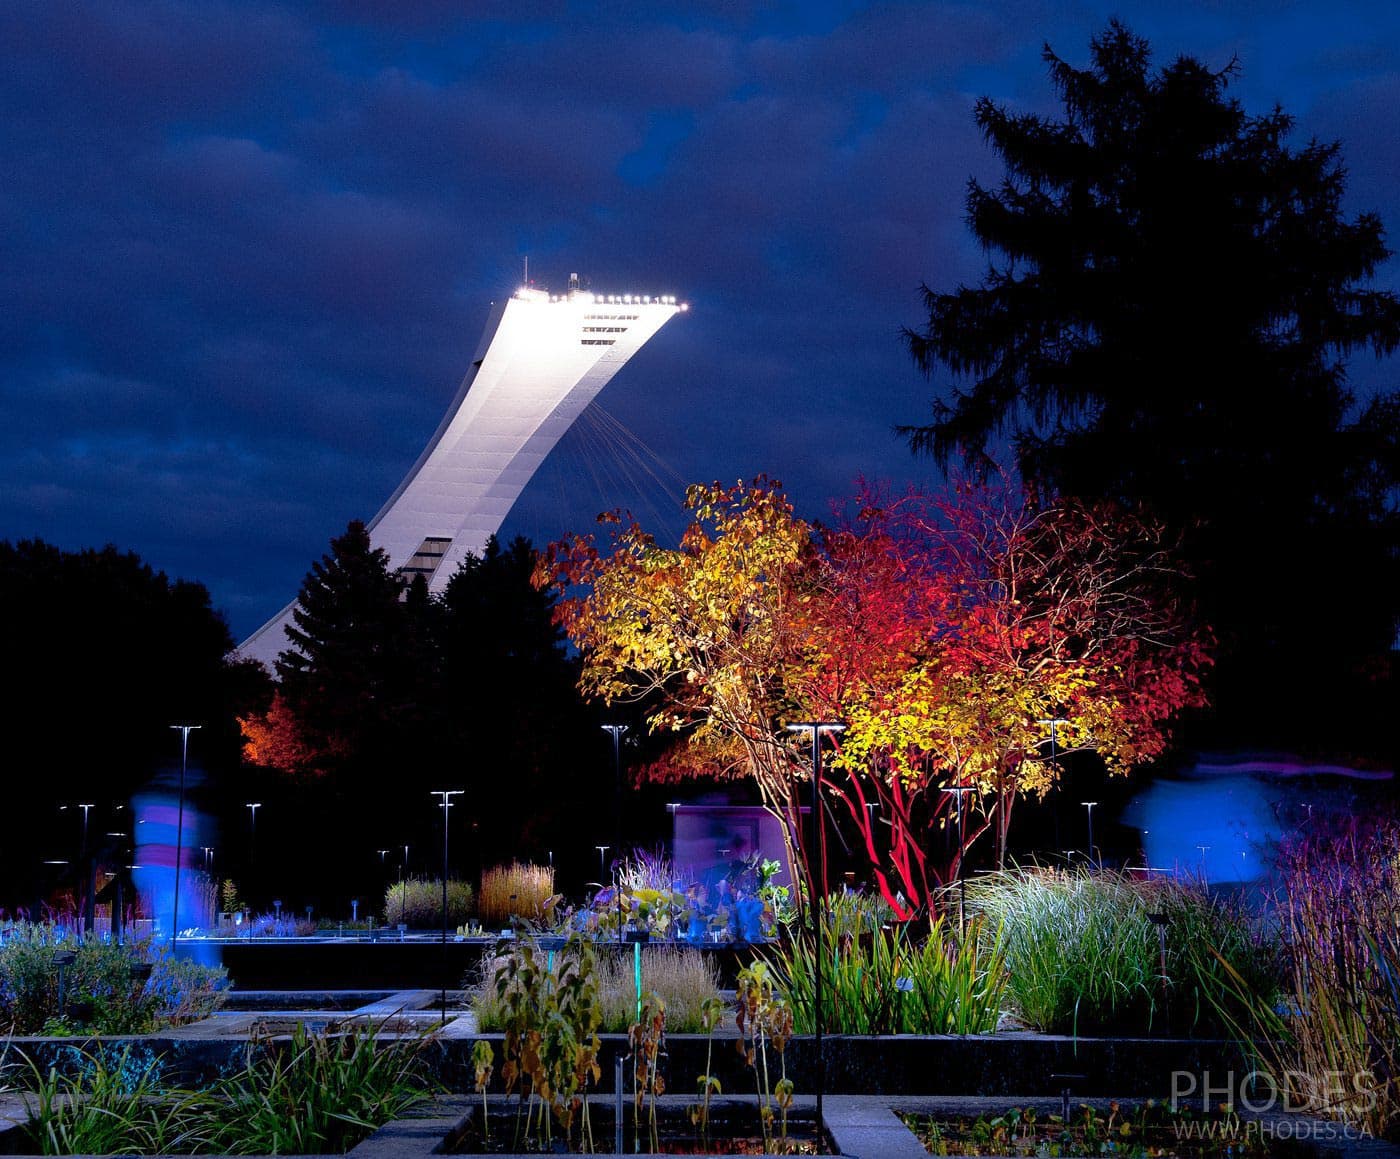 Olympic stadium from Botanical garden, Montreal